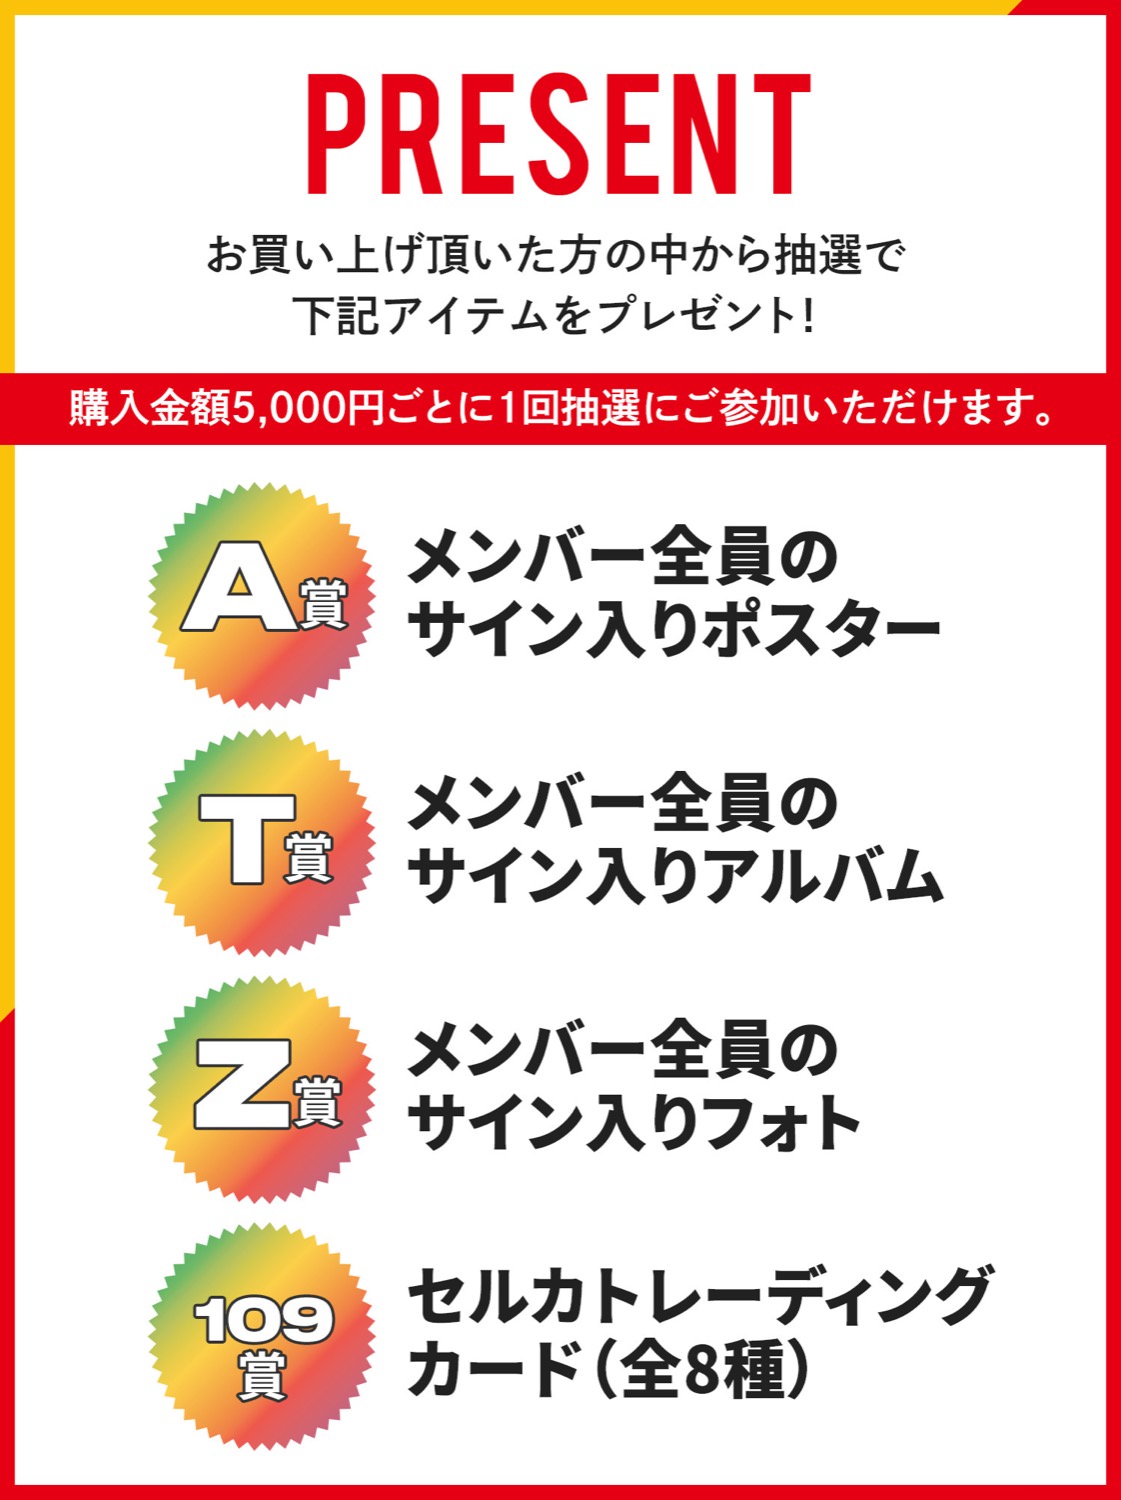 ATEEZポップアップストア in SHIBUYA109「DISP!!!」 9.4-9.22 開催!